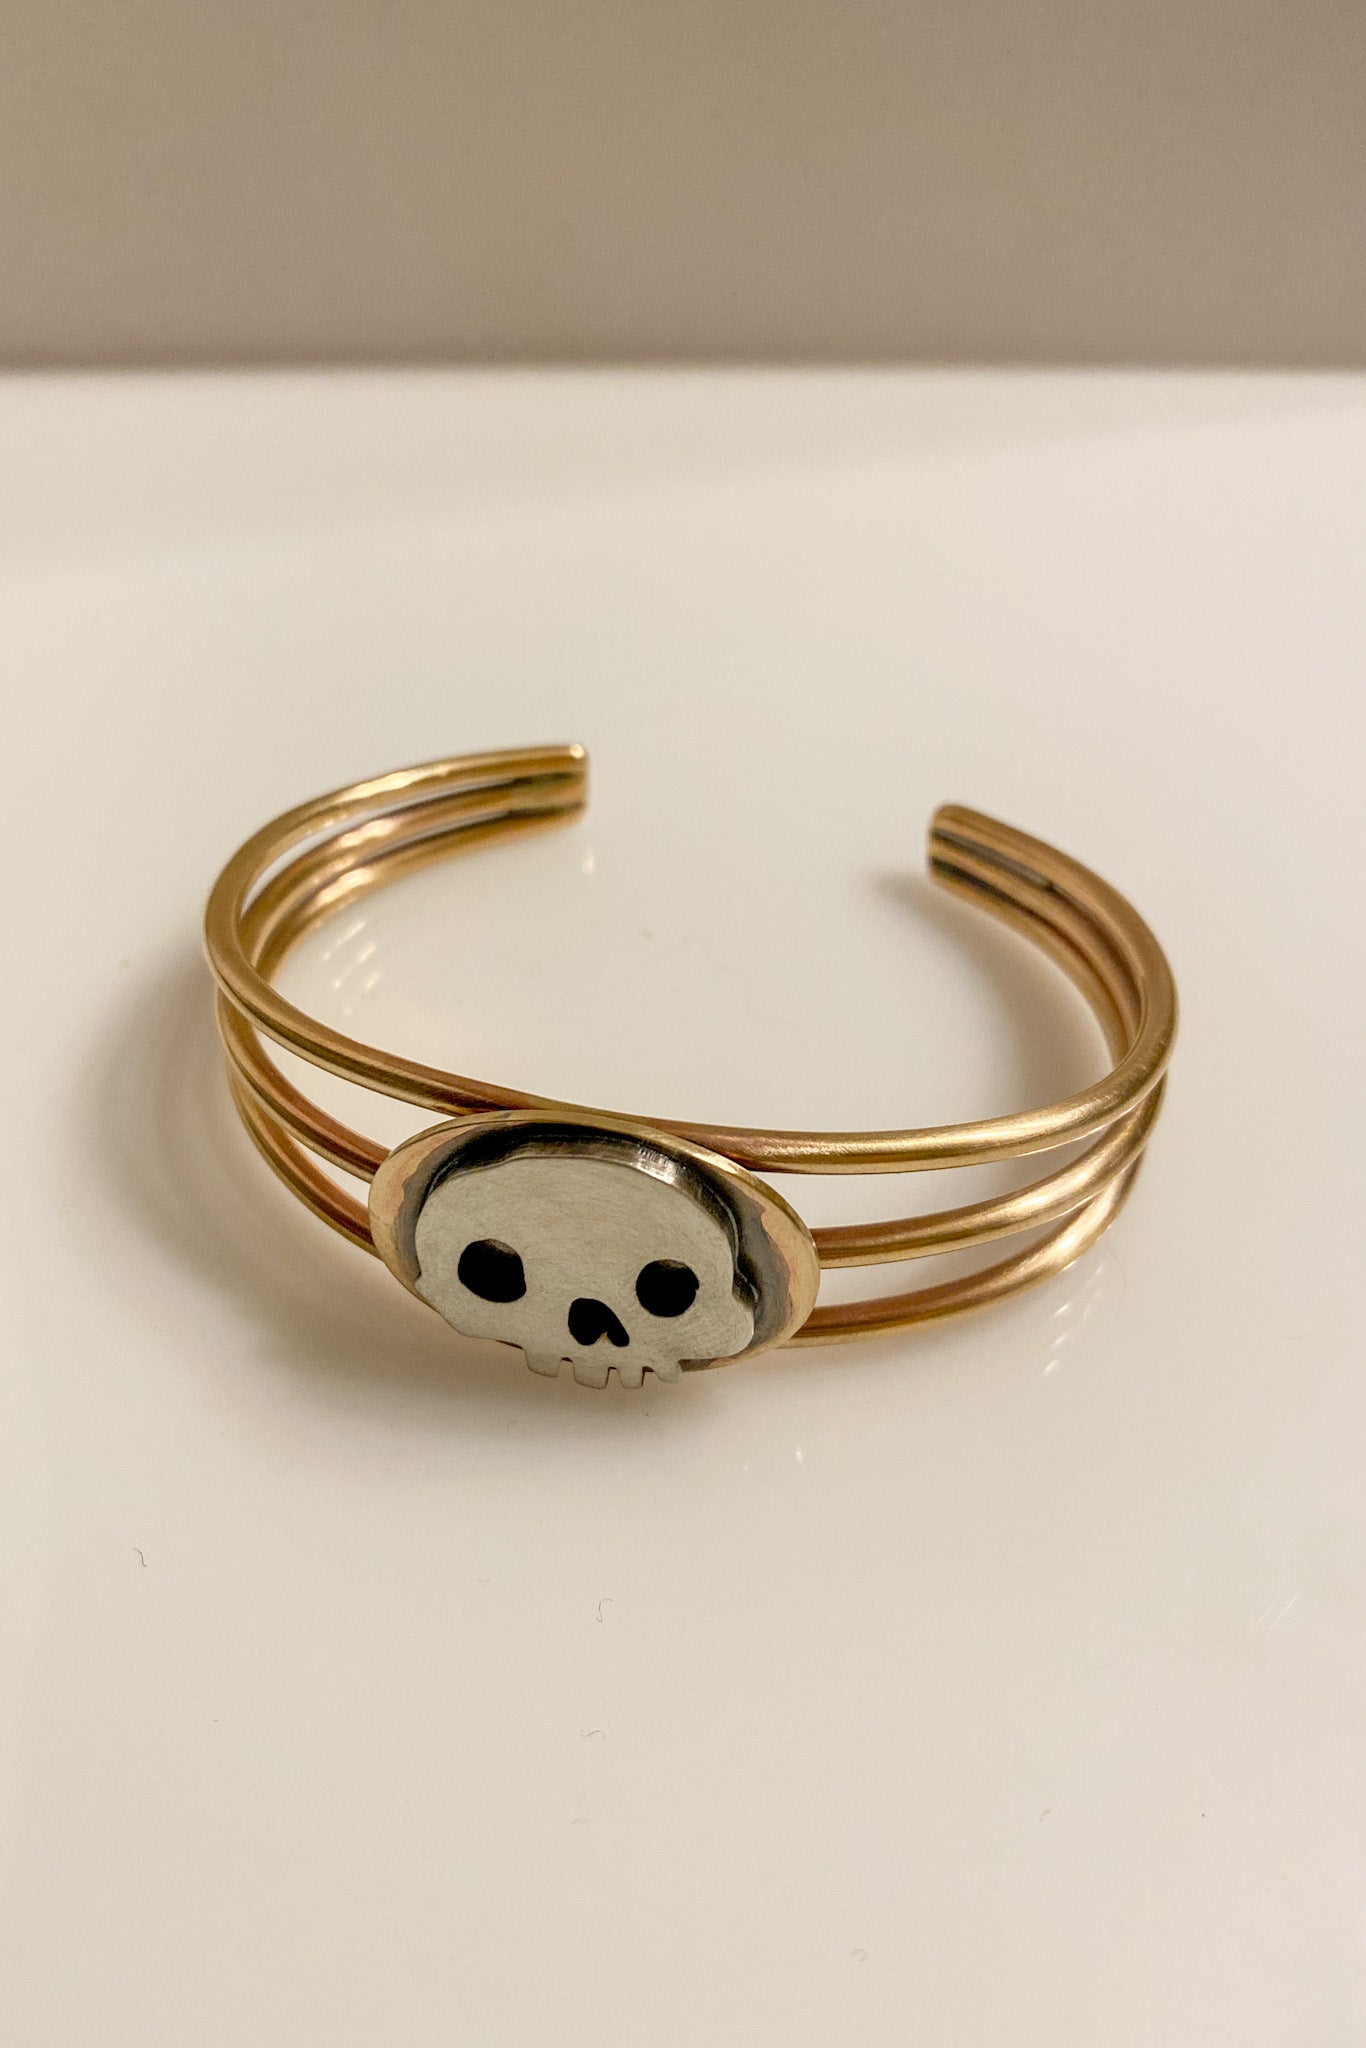 brass cuff with skull